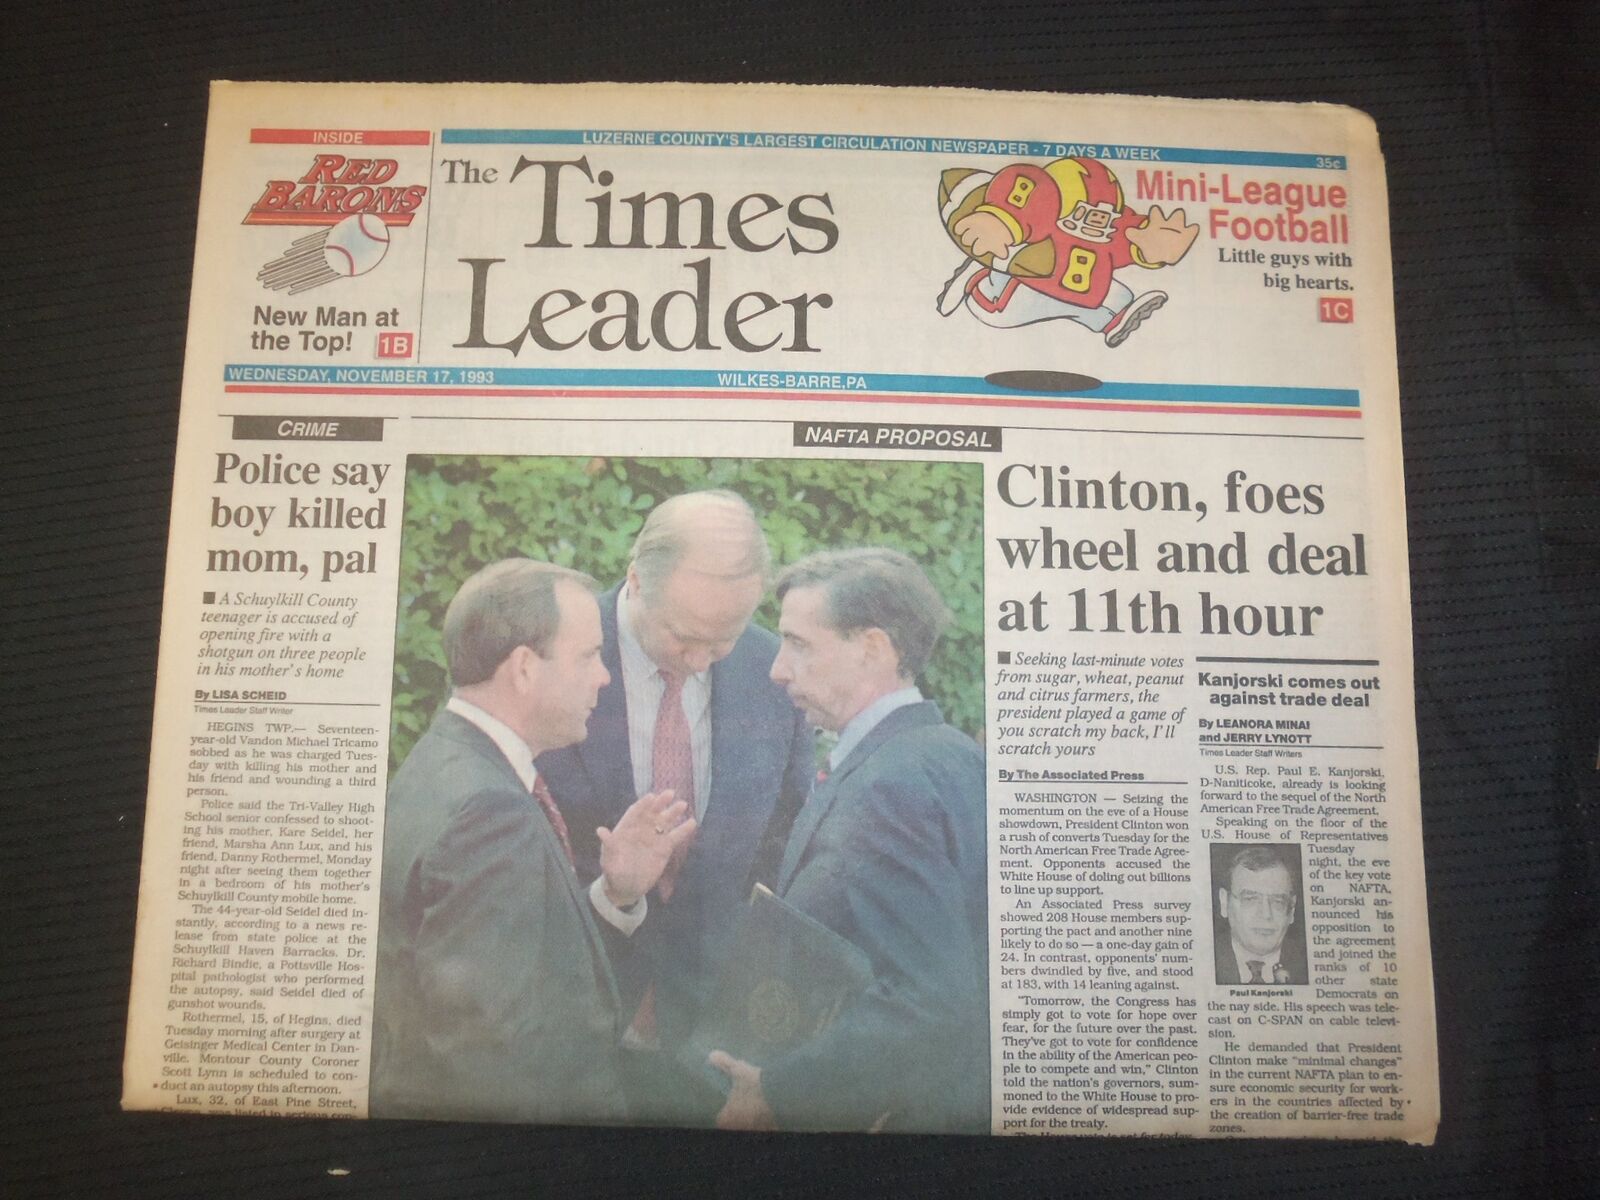 1993 NOV 17 WILKES-BARRE TIMES LEADER-CLINTON/FOES WHEEL/DEAL AT 11 HR - NP 7553